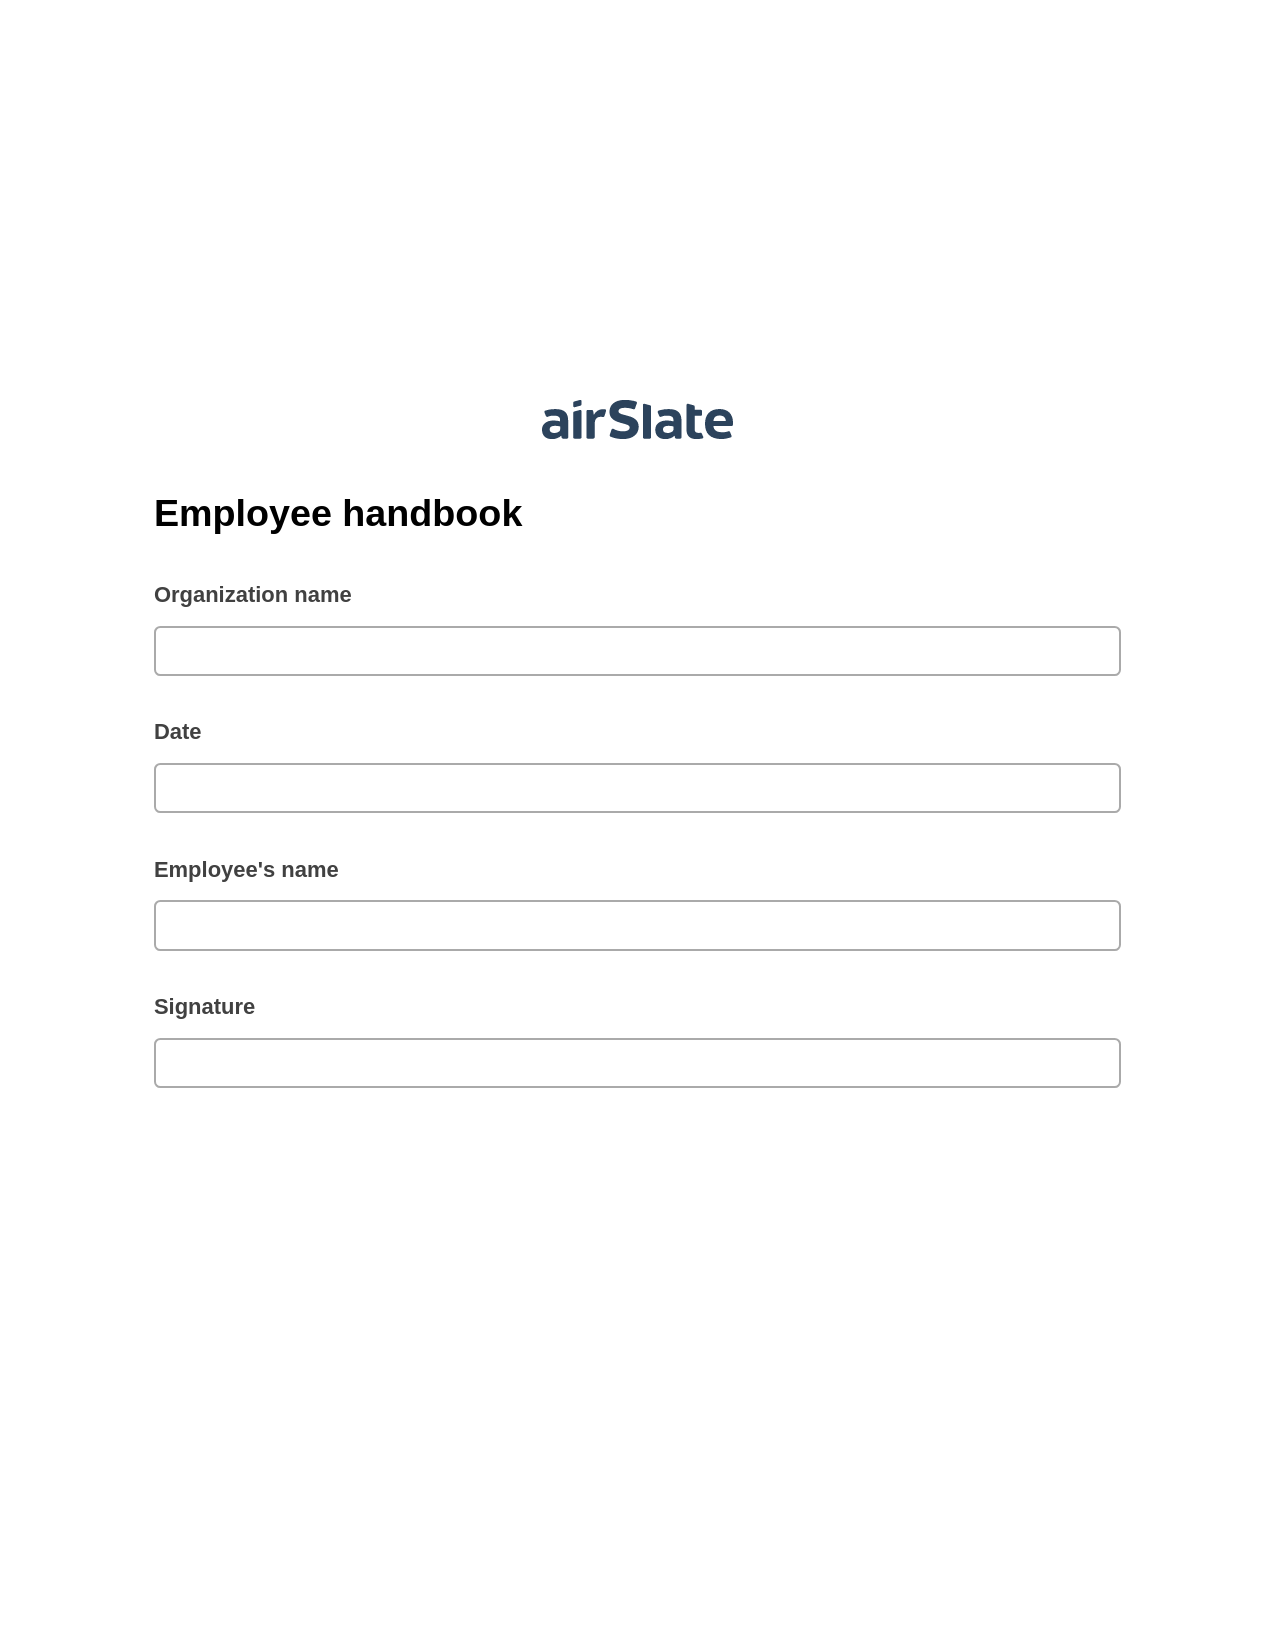 Multirole Employee handbook Pre-fill from Salesforce Records with SOQL Bot, Google Sheet Two-Way Binding Bot, Email Notification Postfinish Bot